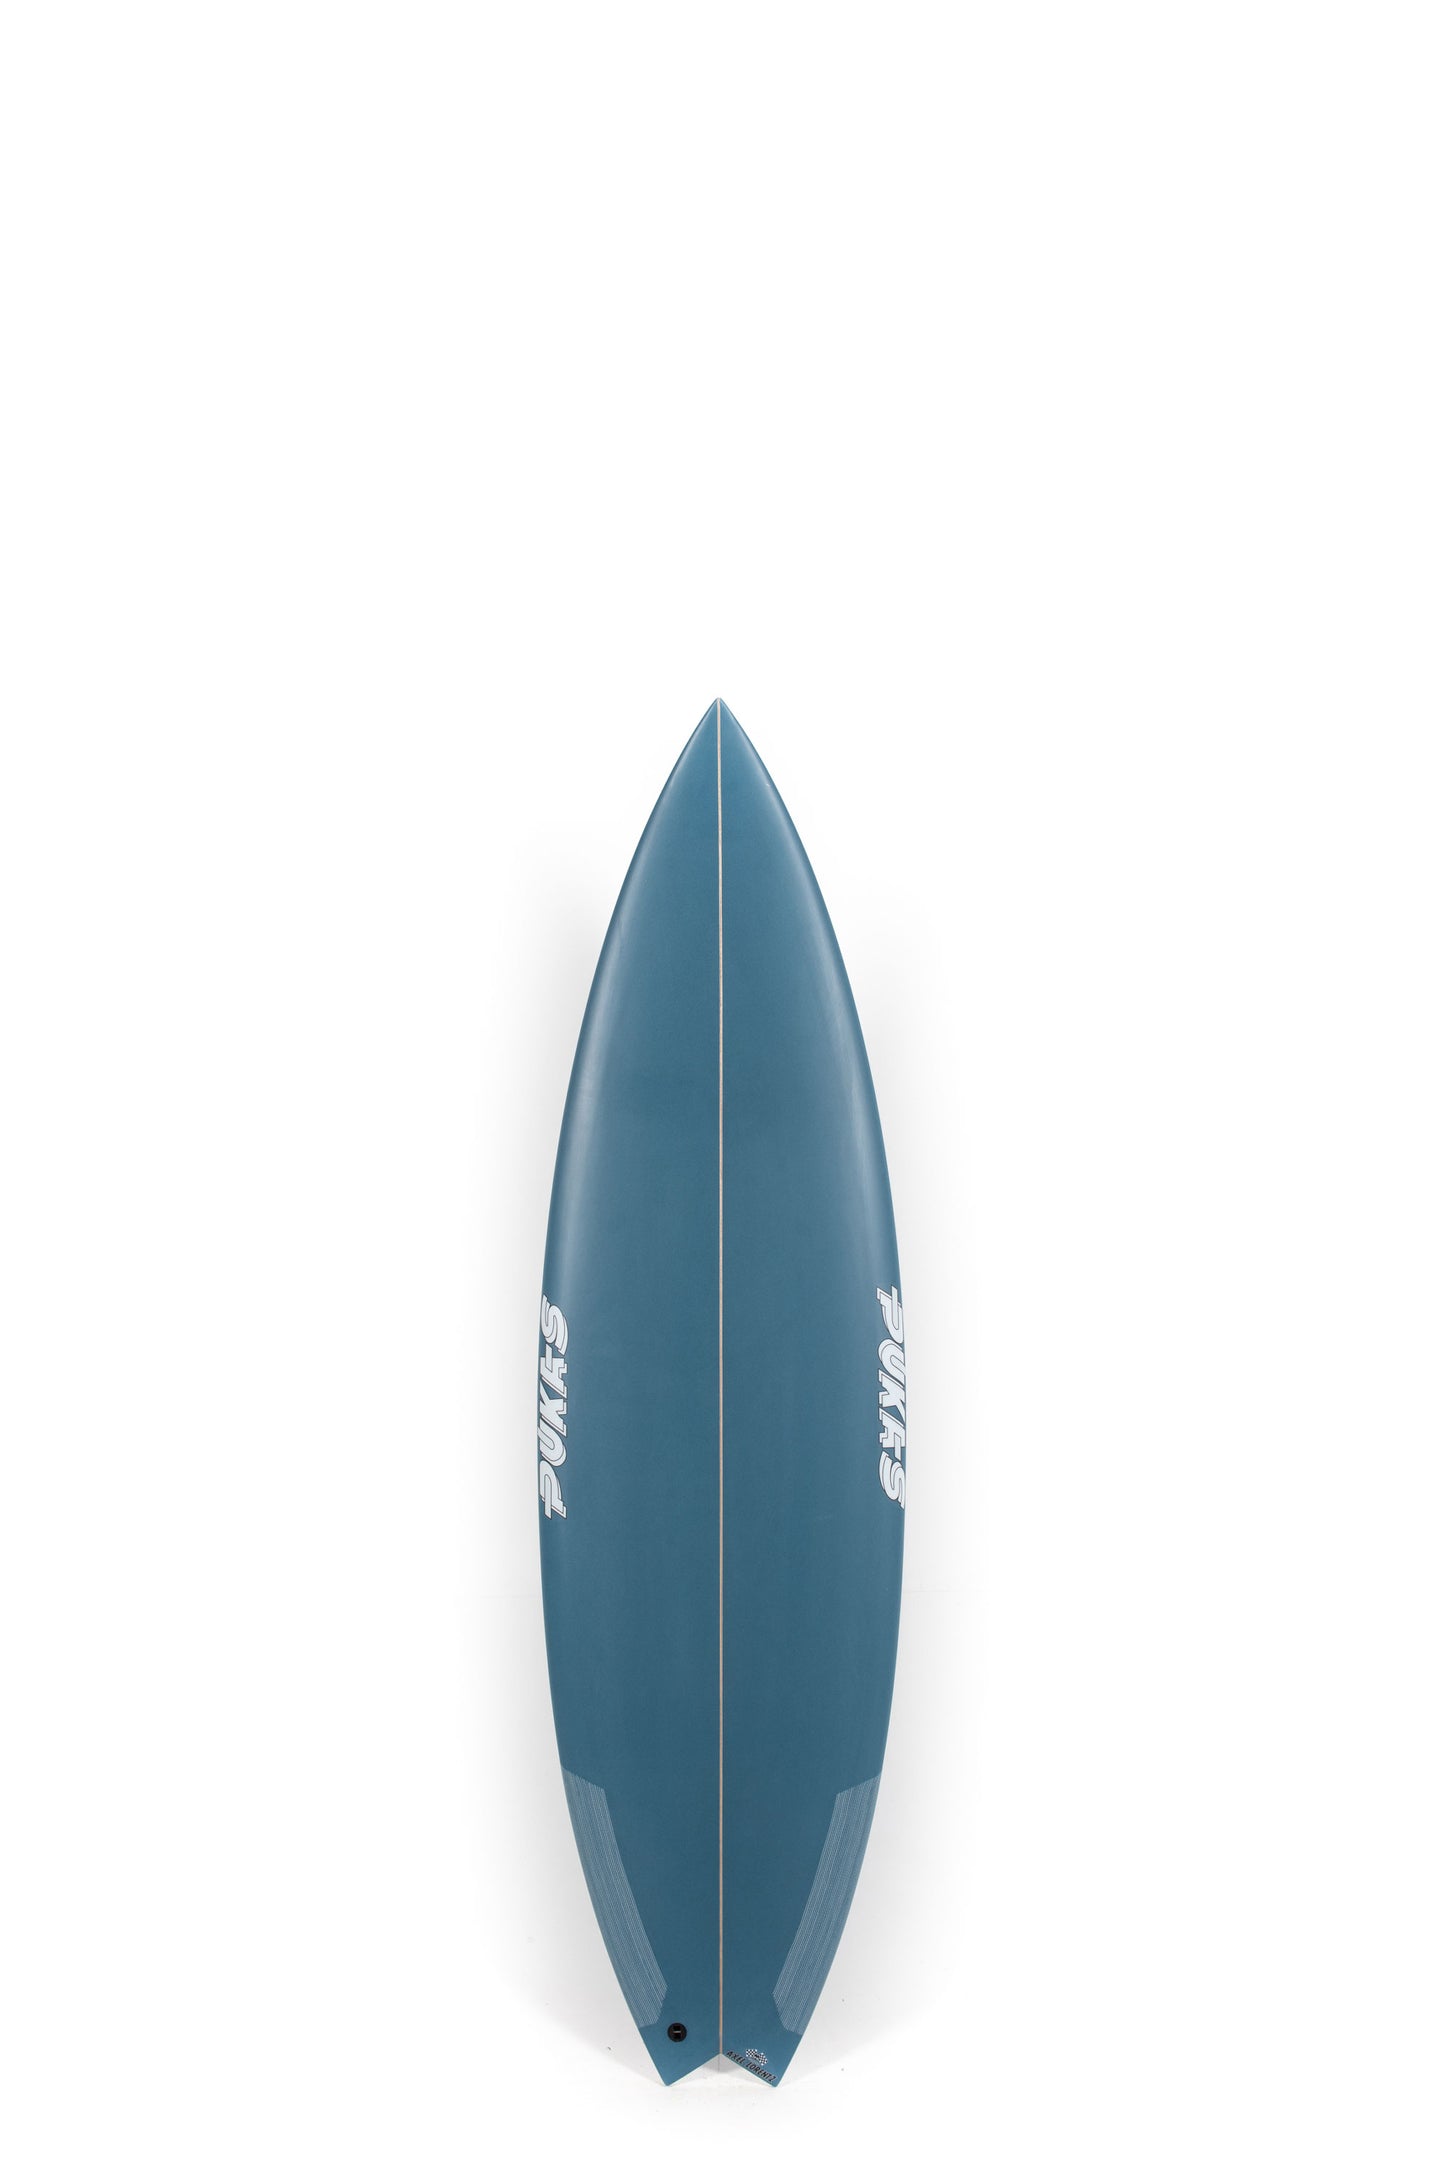 Pukas Surf Shop - Pukas Surfboard - DARK by Axel Lorentz - 6’1” x 19,63 x 2,4 - 30,67L - AX09204